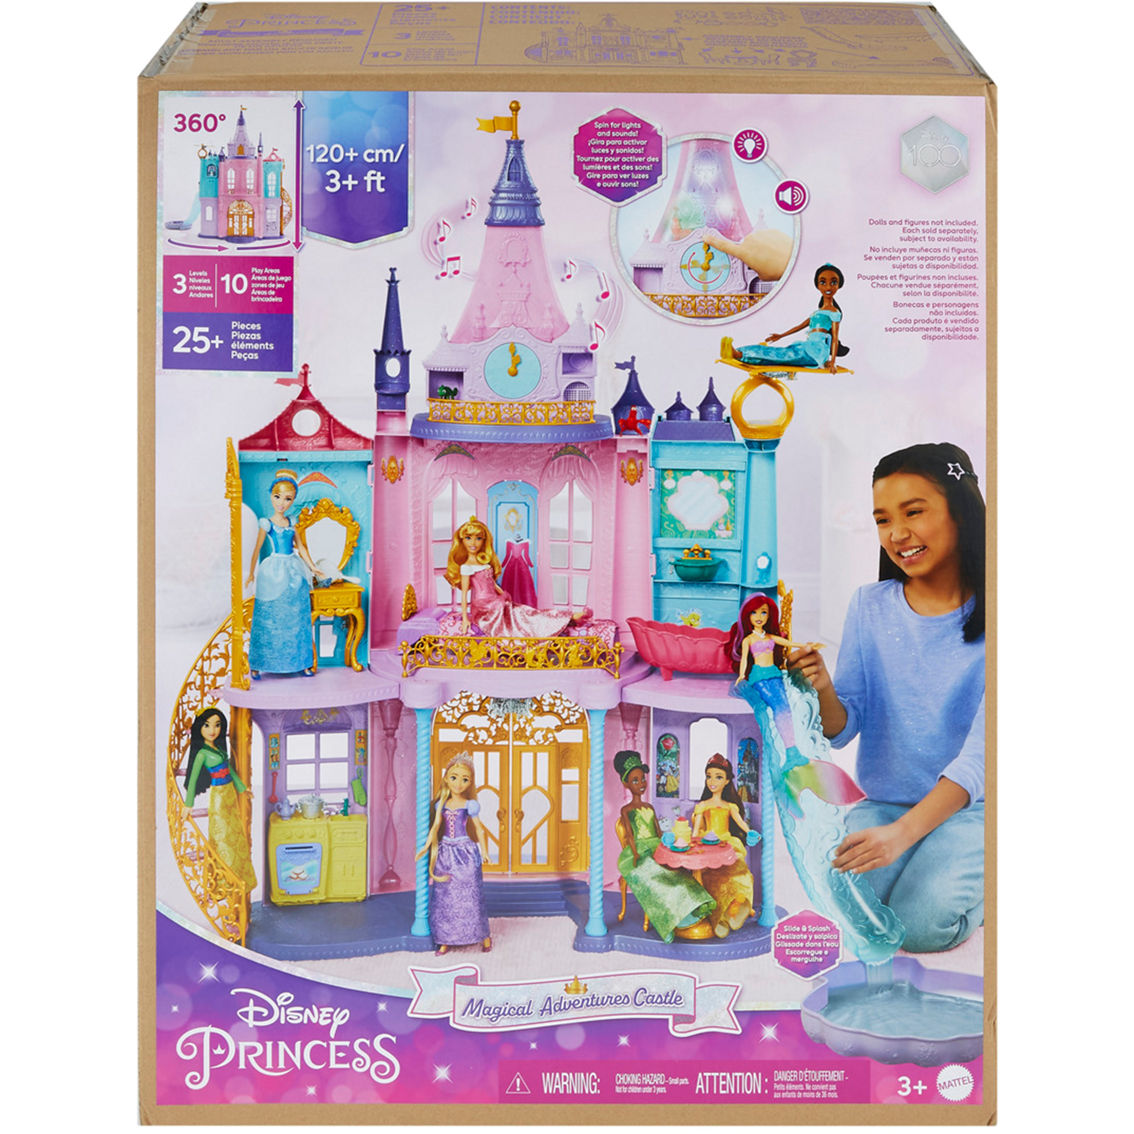 Disney Princess Royal Adventures Castle Dollhouse - Image 8 of 8